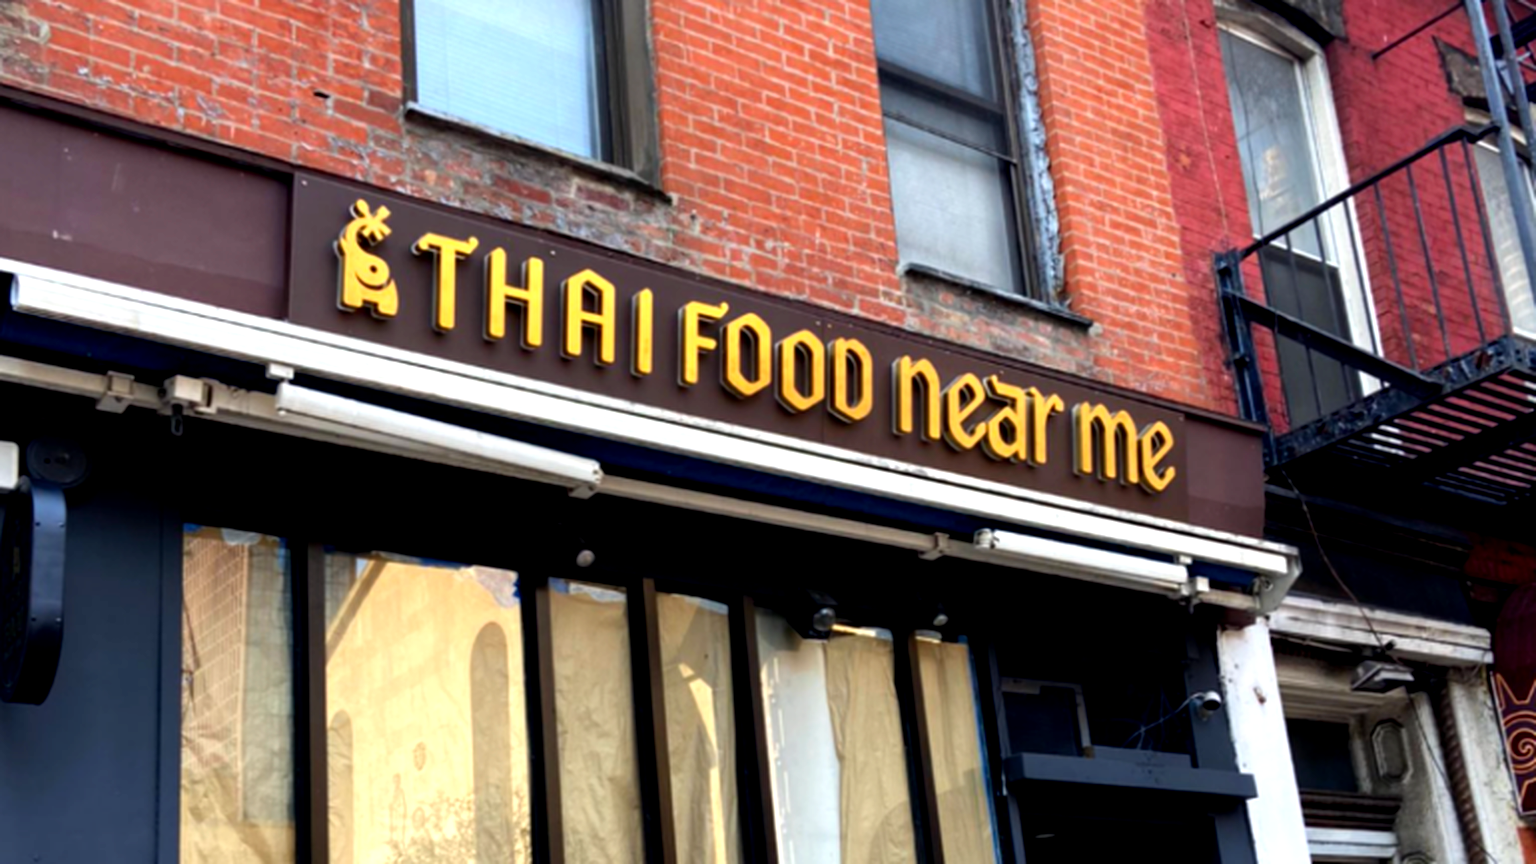 NYC restaurant named ‘Thai Food Near Me’ goes viral